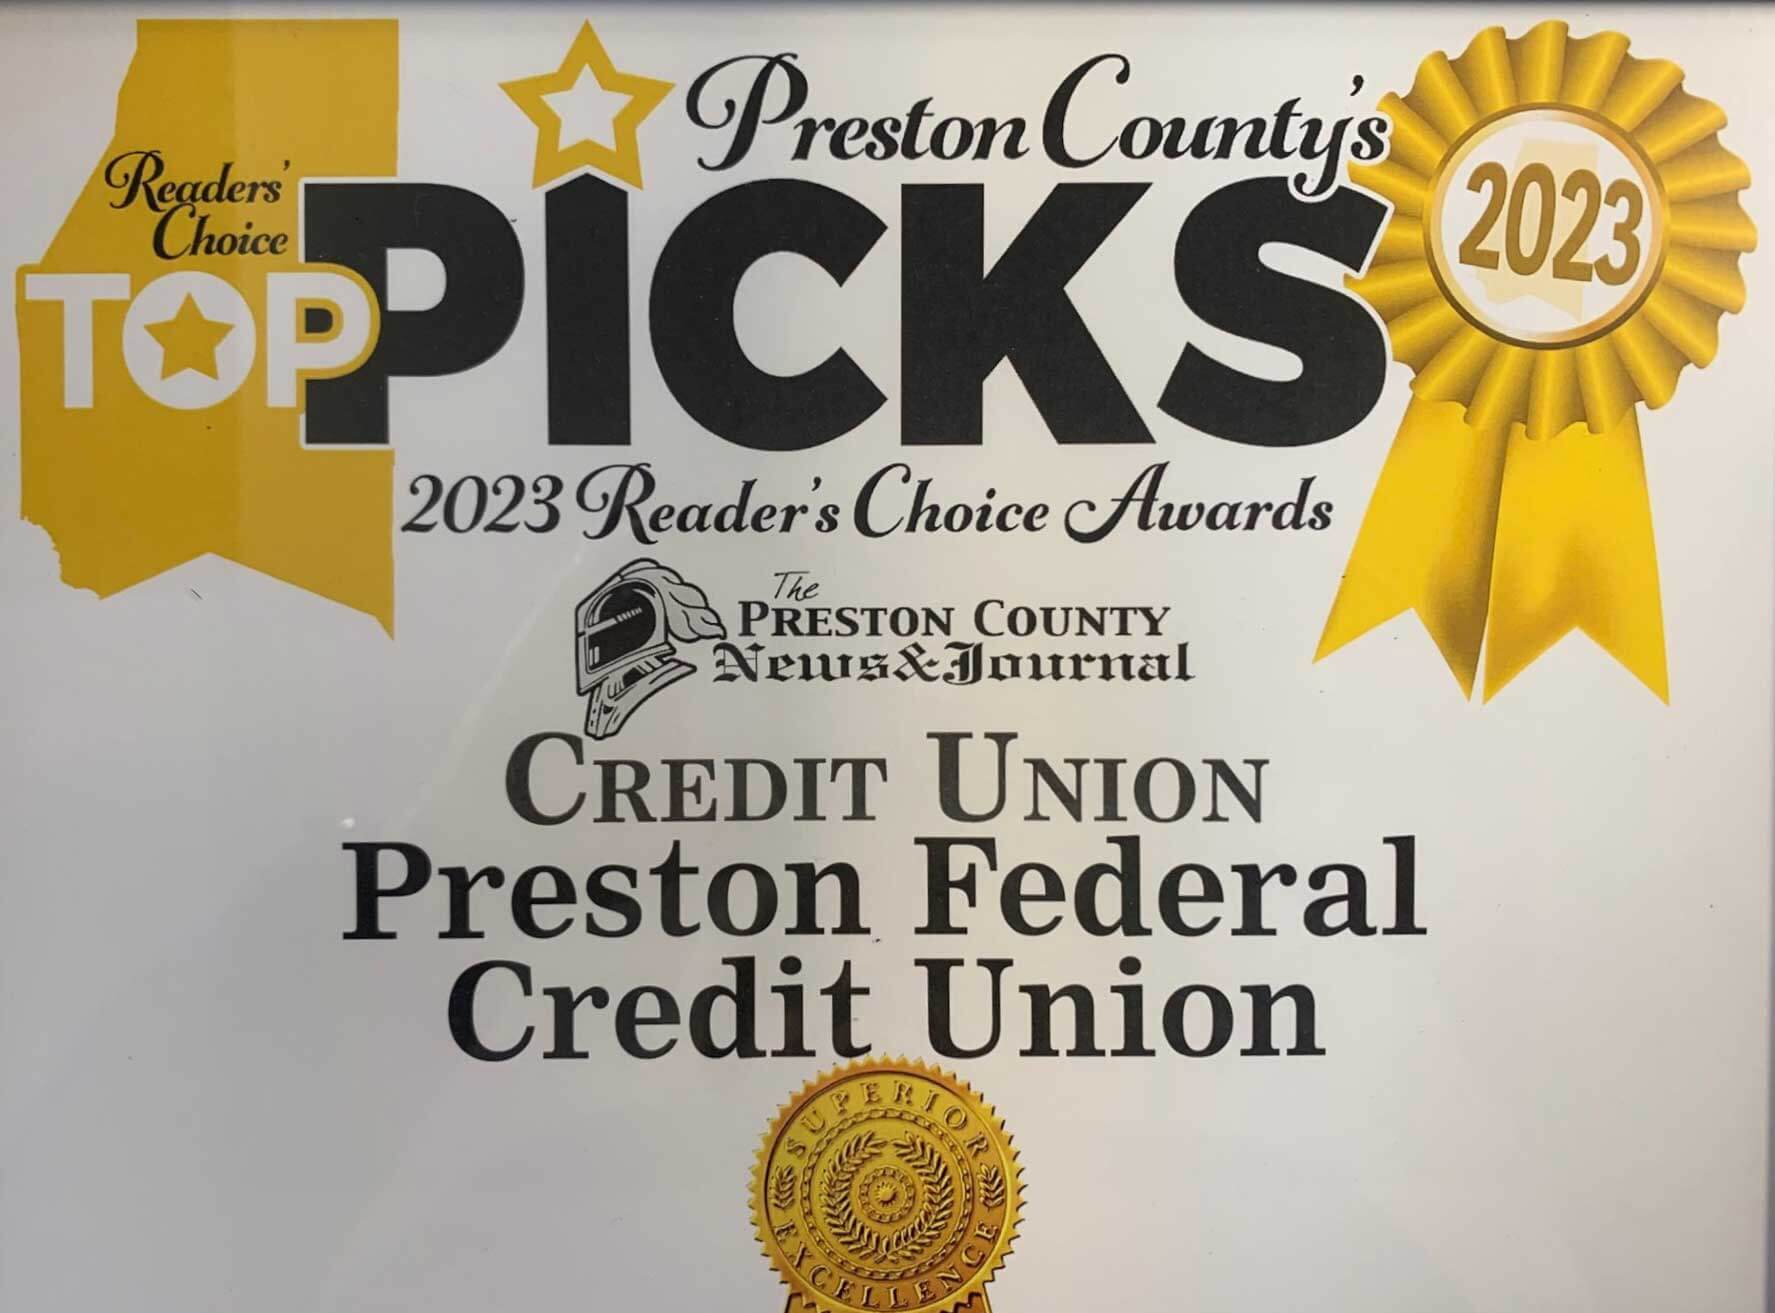 Preston County’s Reader’s Choice Top Picks 2023